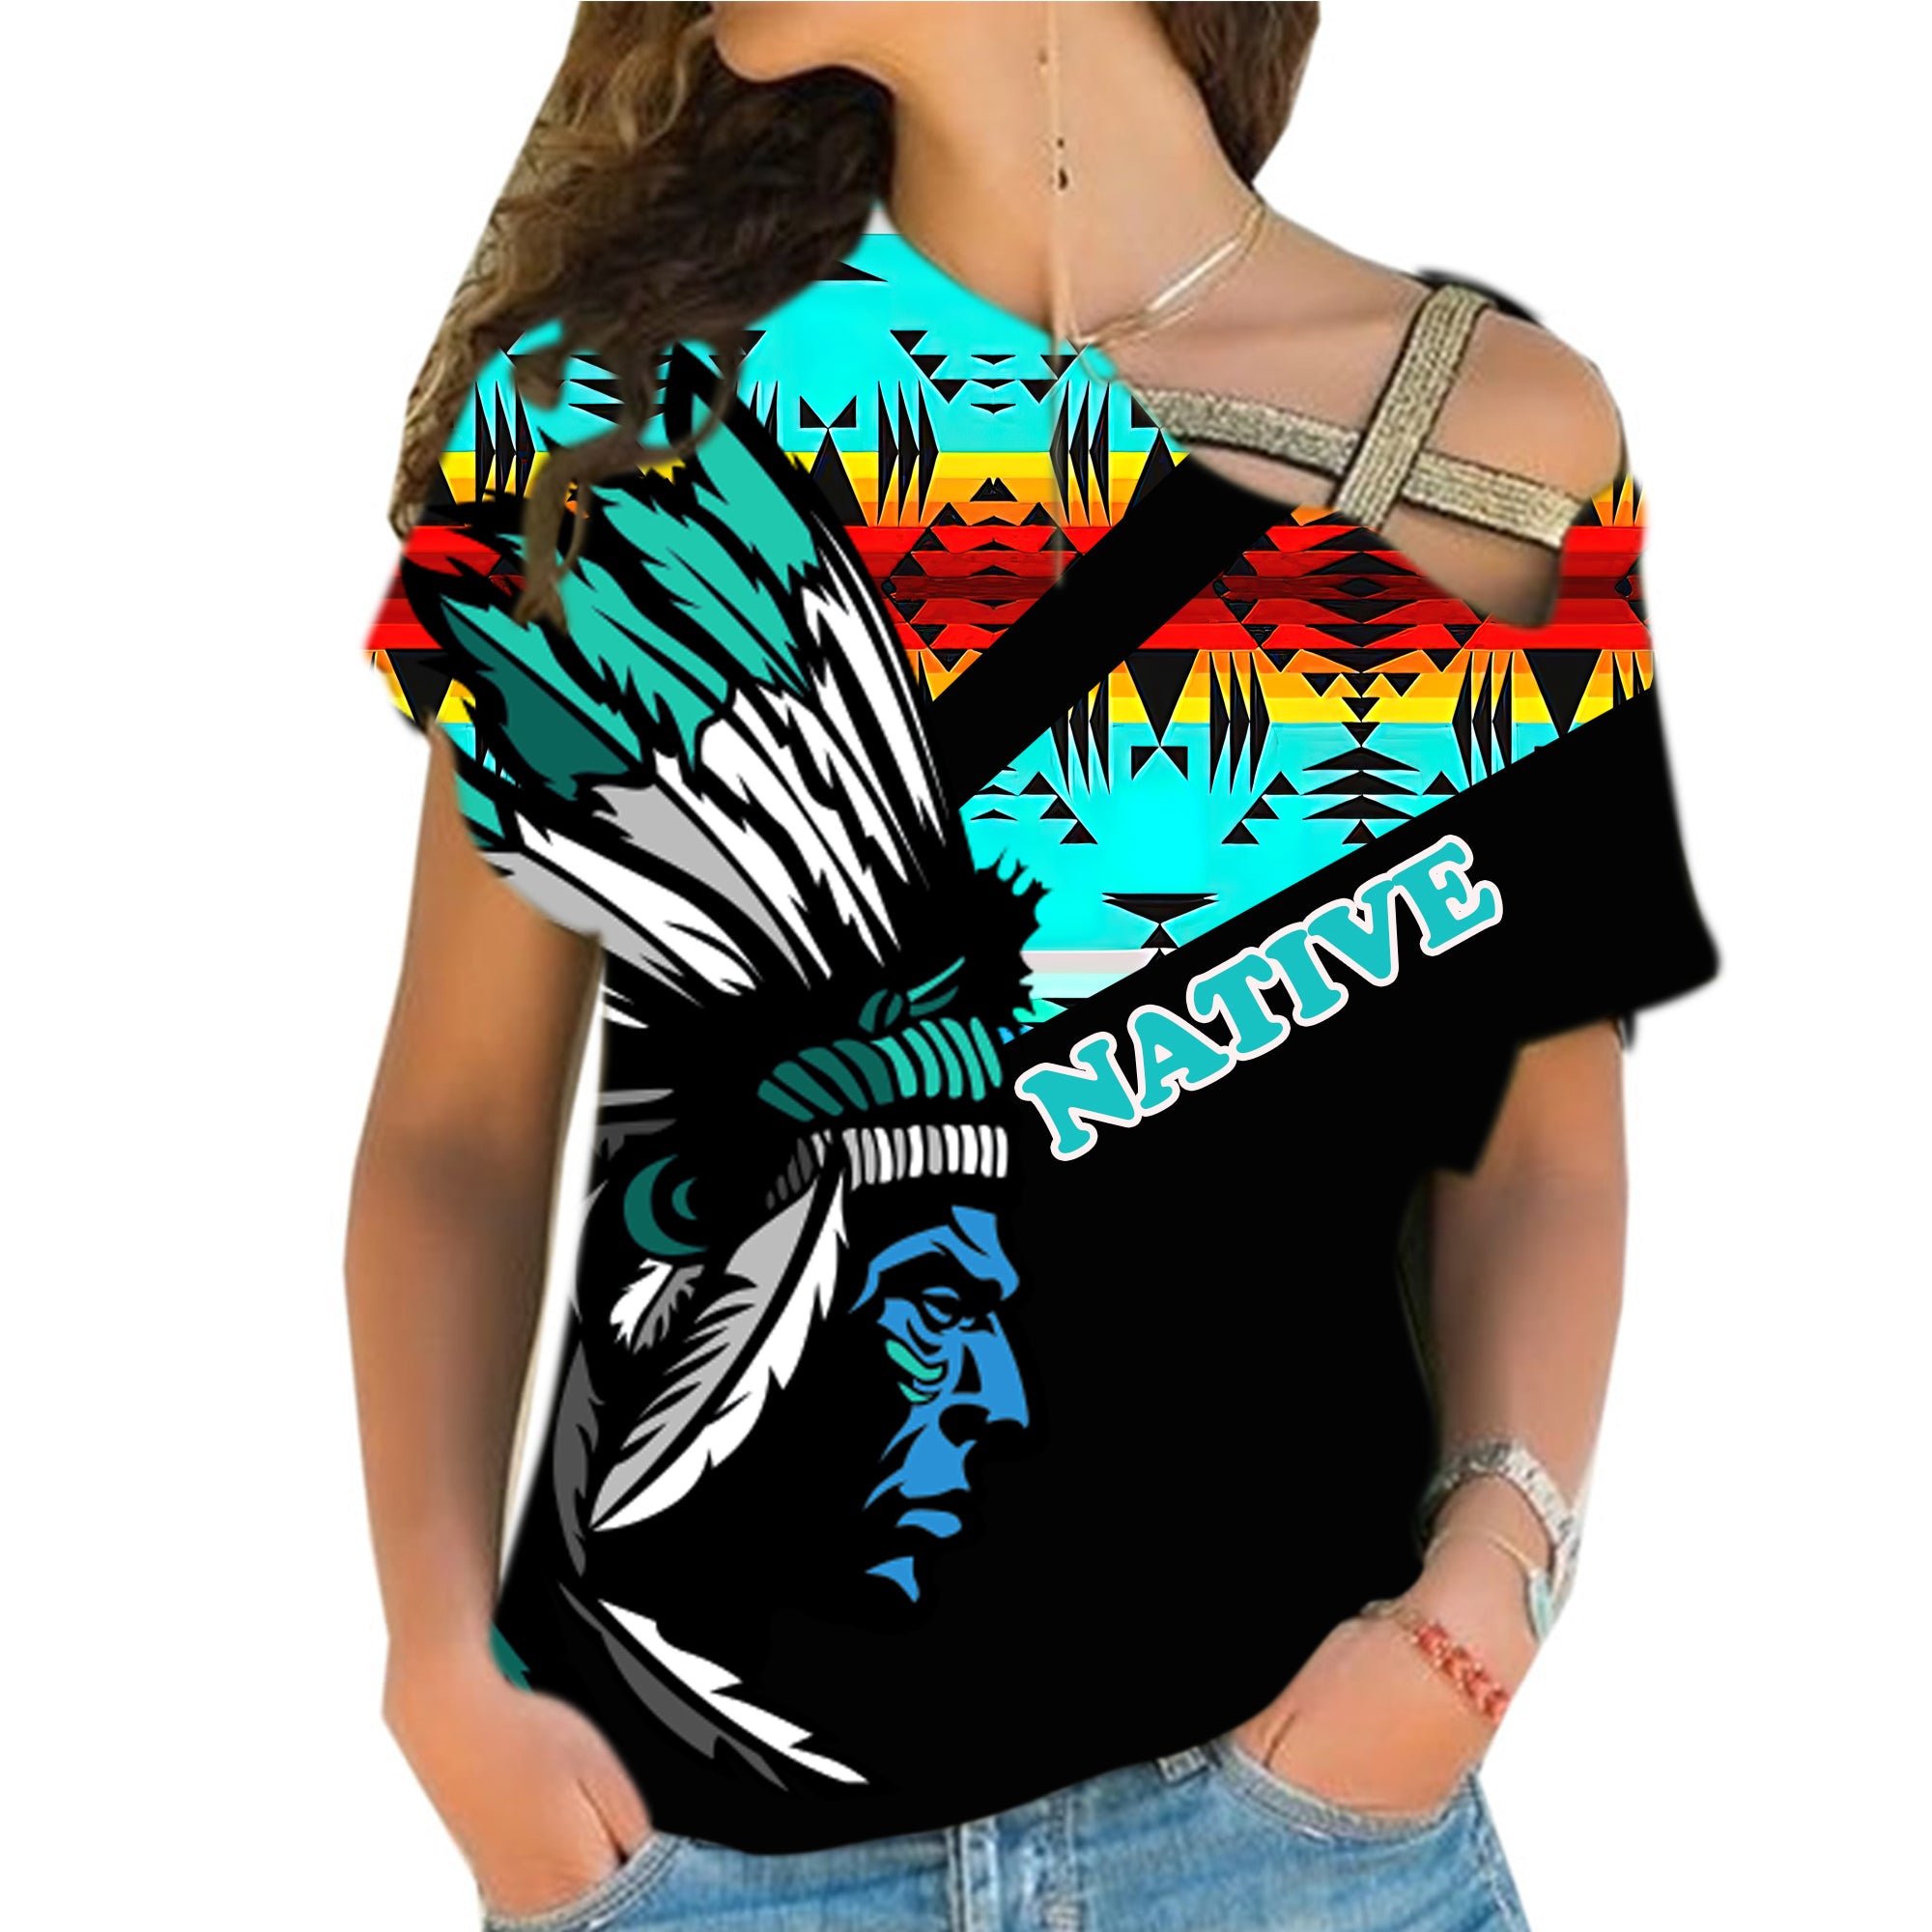 Powwow StoreCRS0001212 Native American Cross Shoulder Shirt